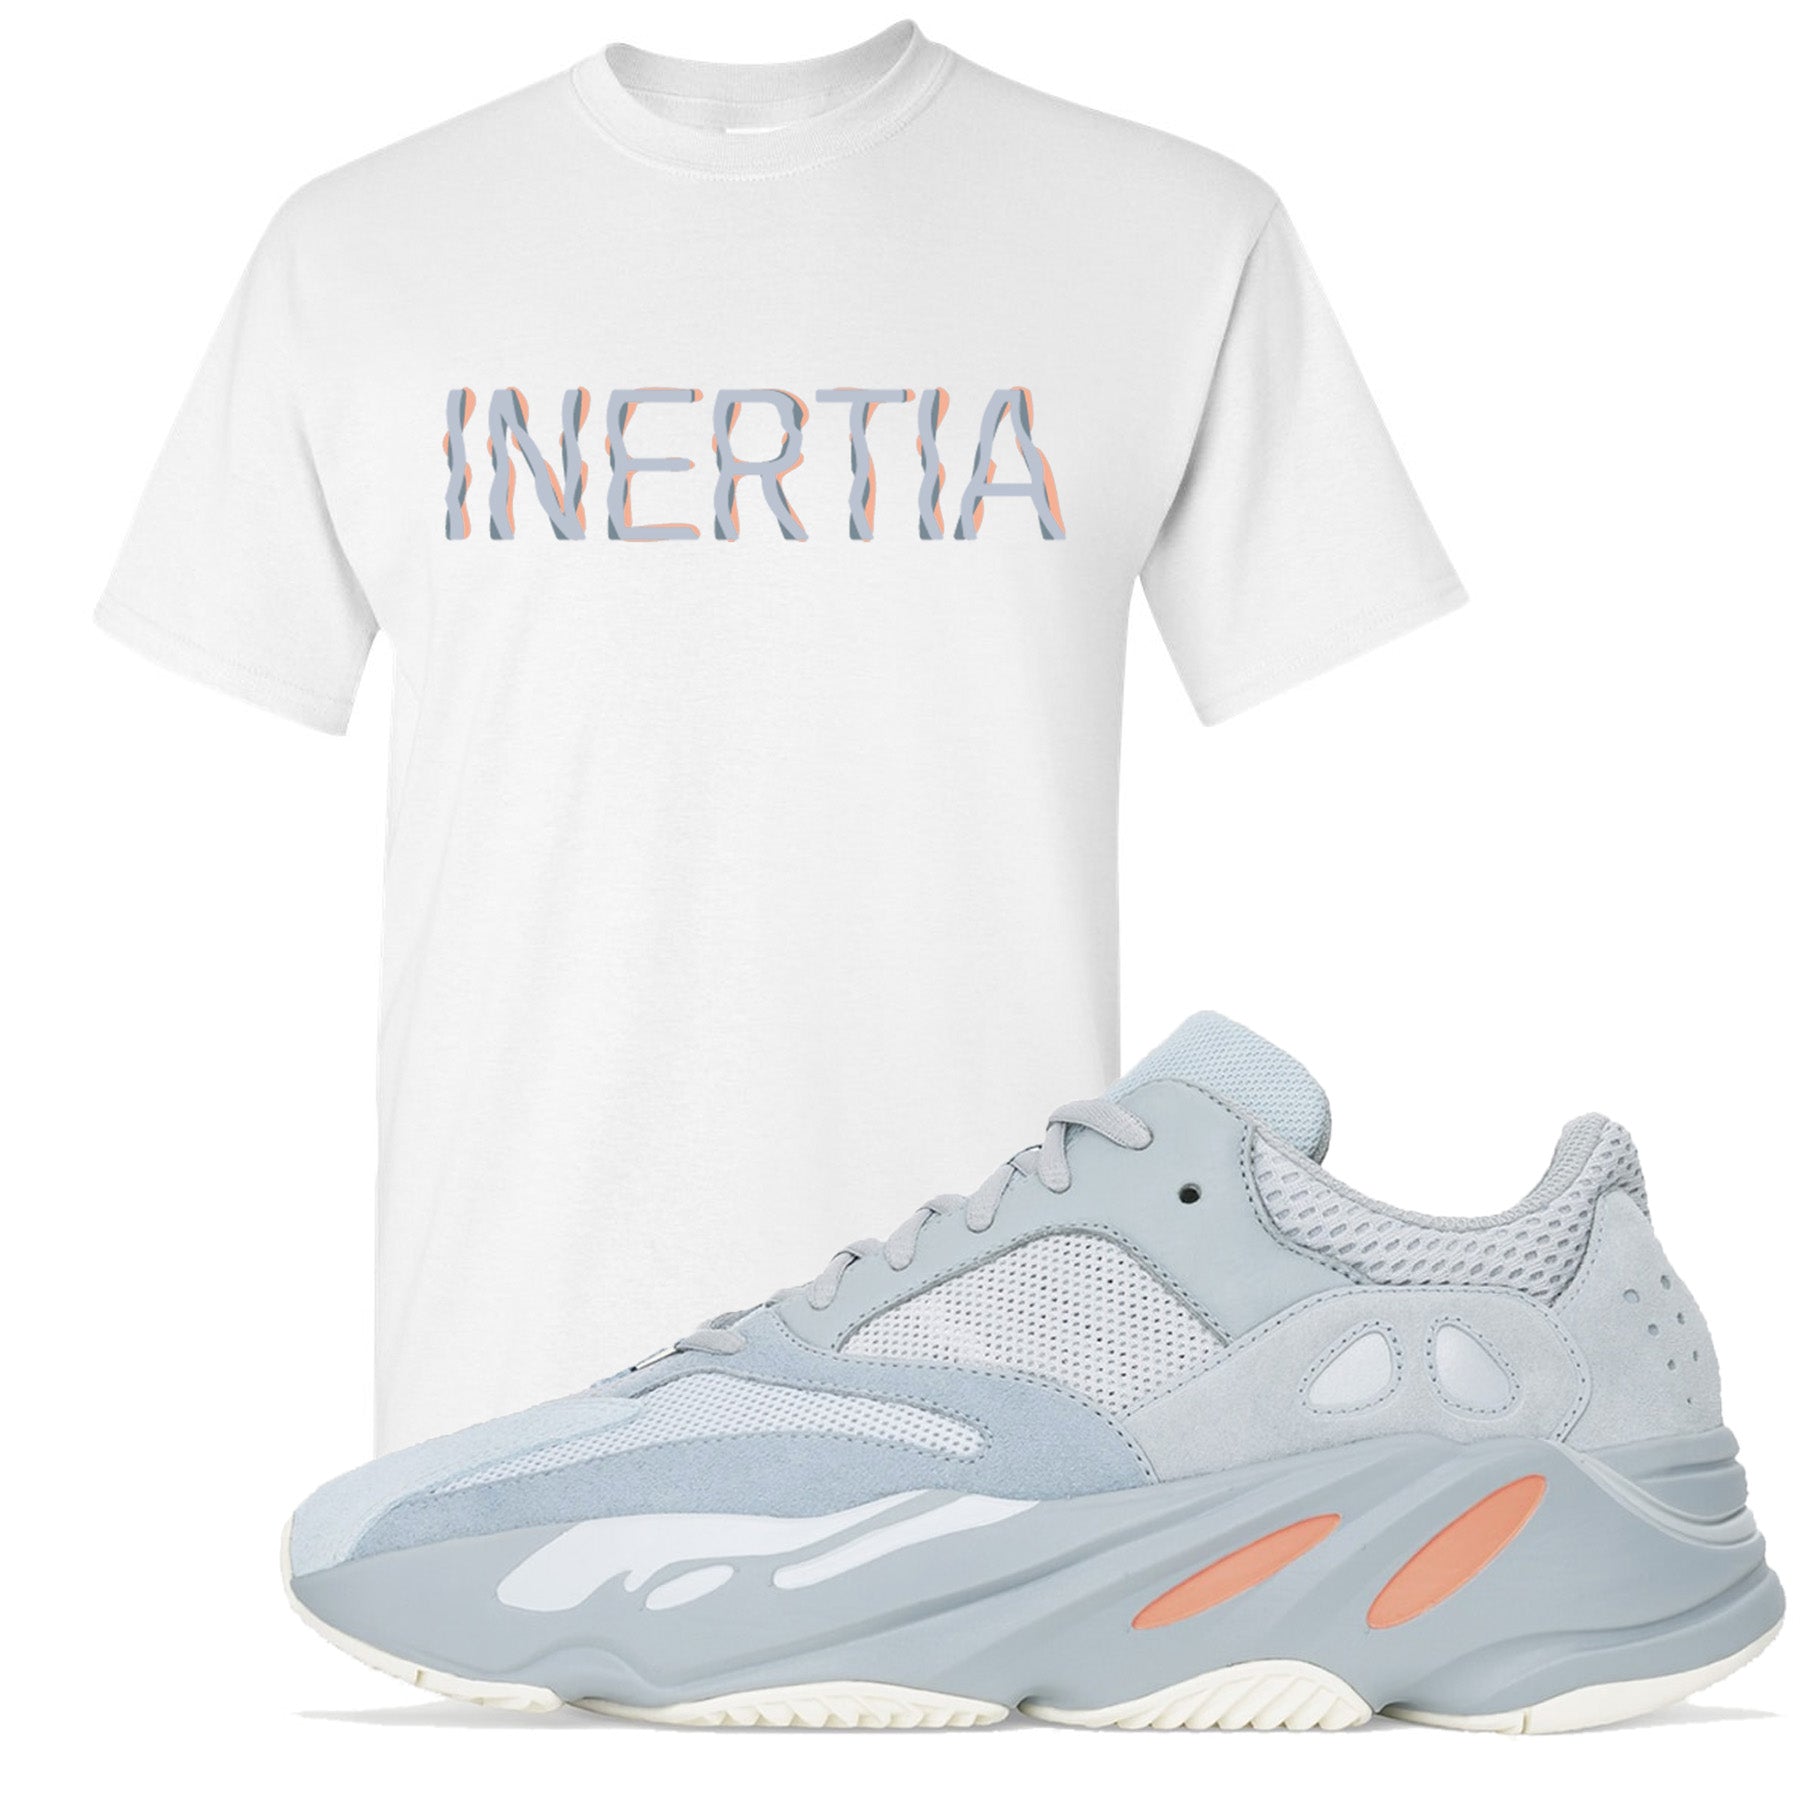 inertia yeezy 700 shirt